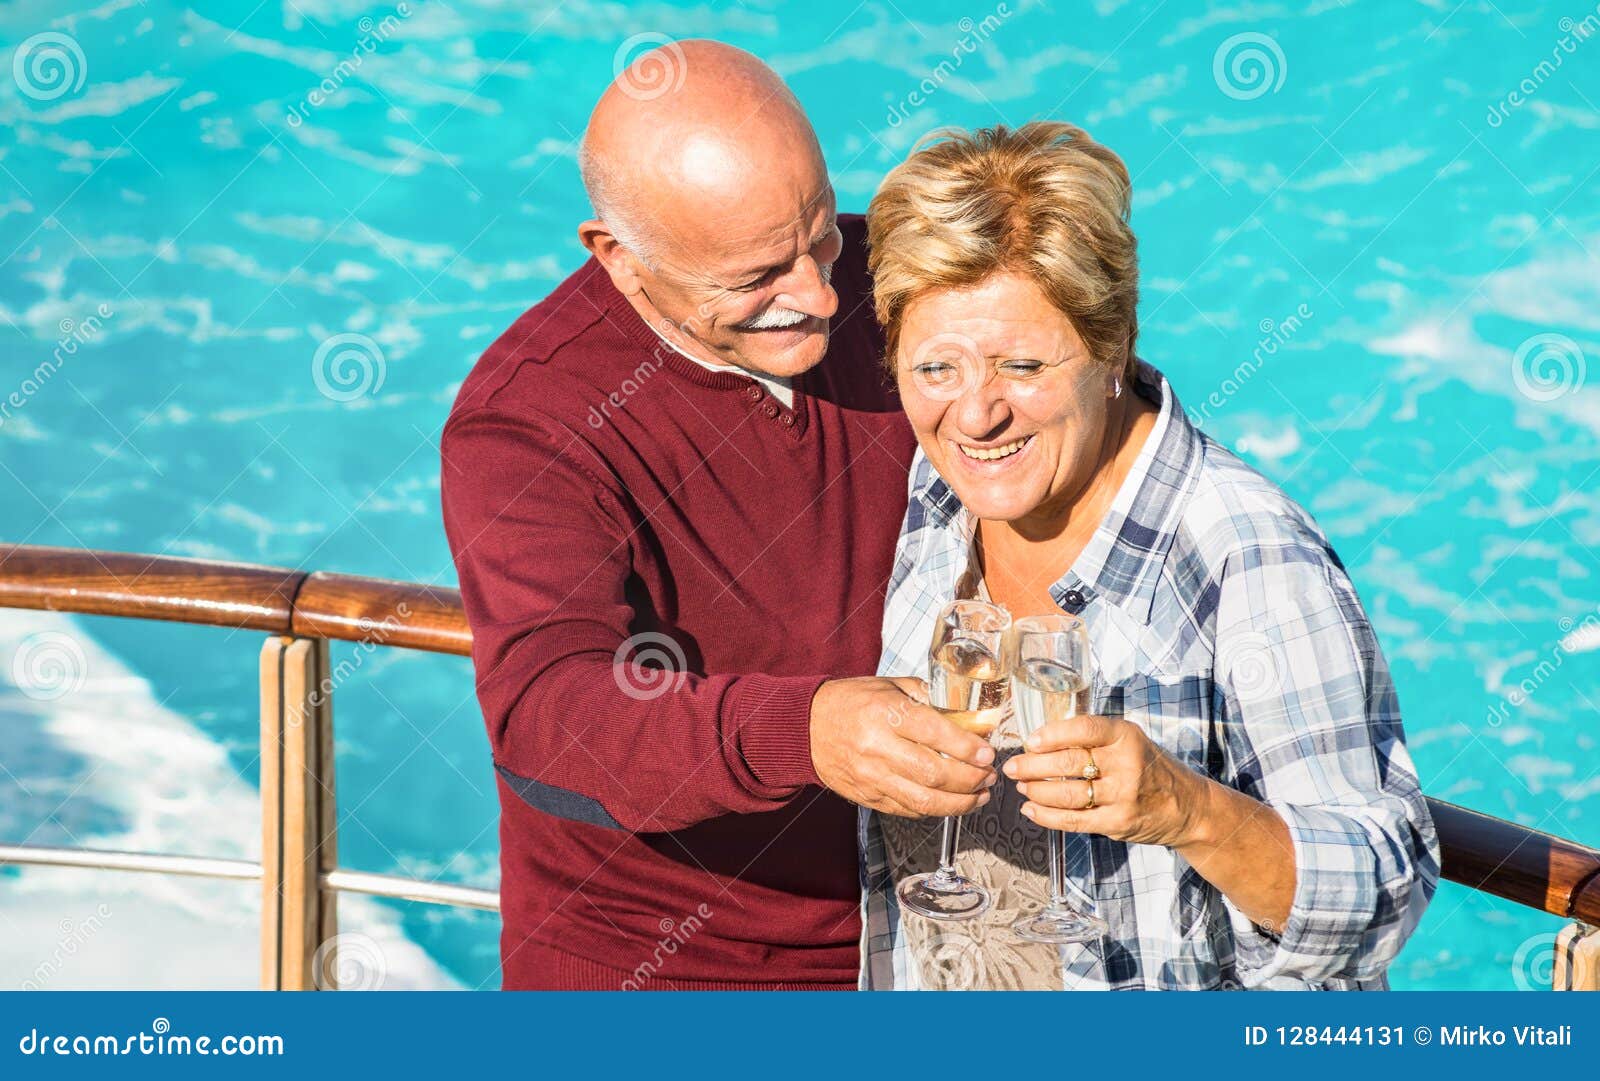 happy senior retired couple having fun outdoors at travel vacation